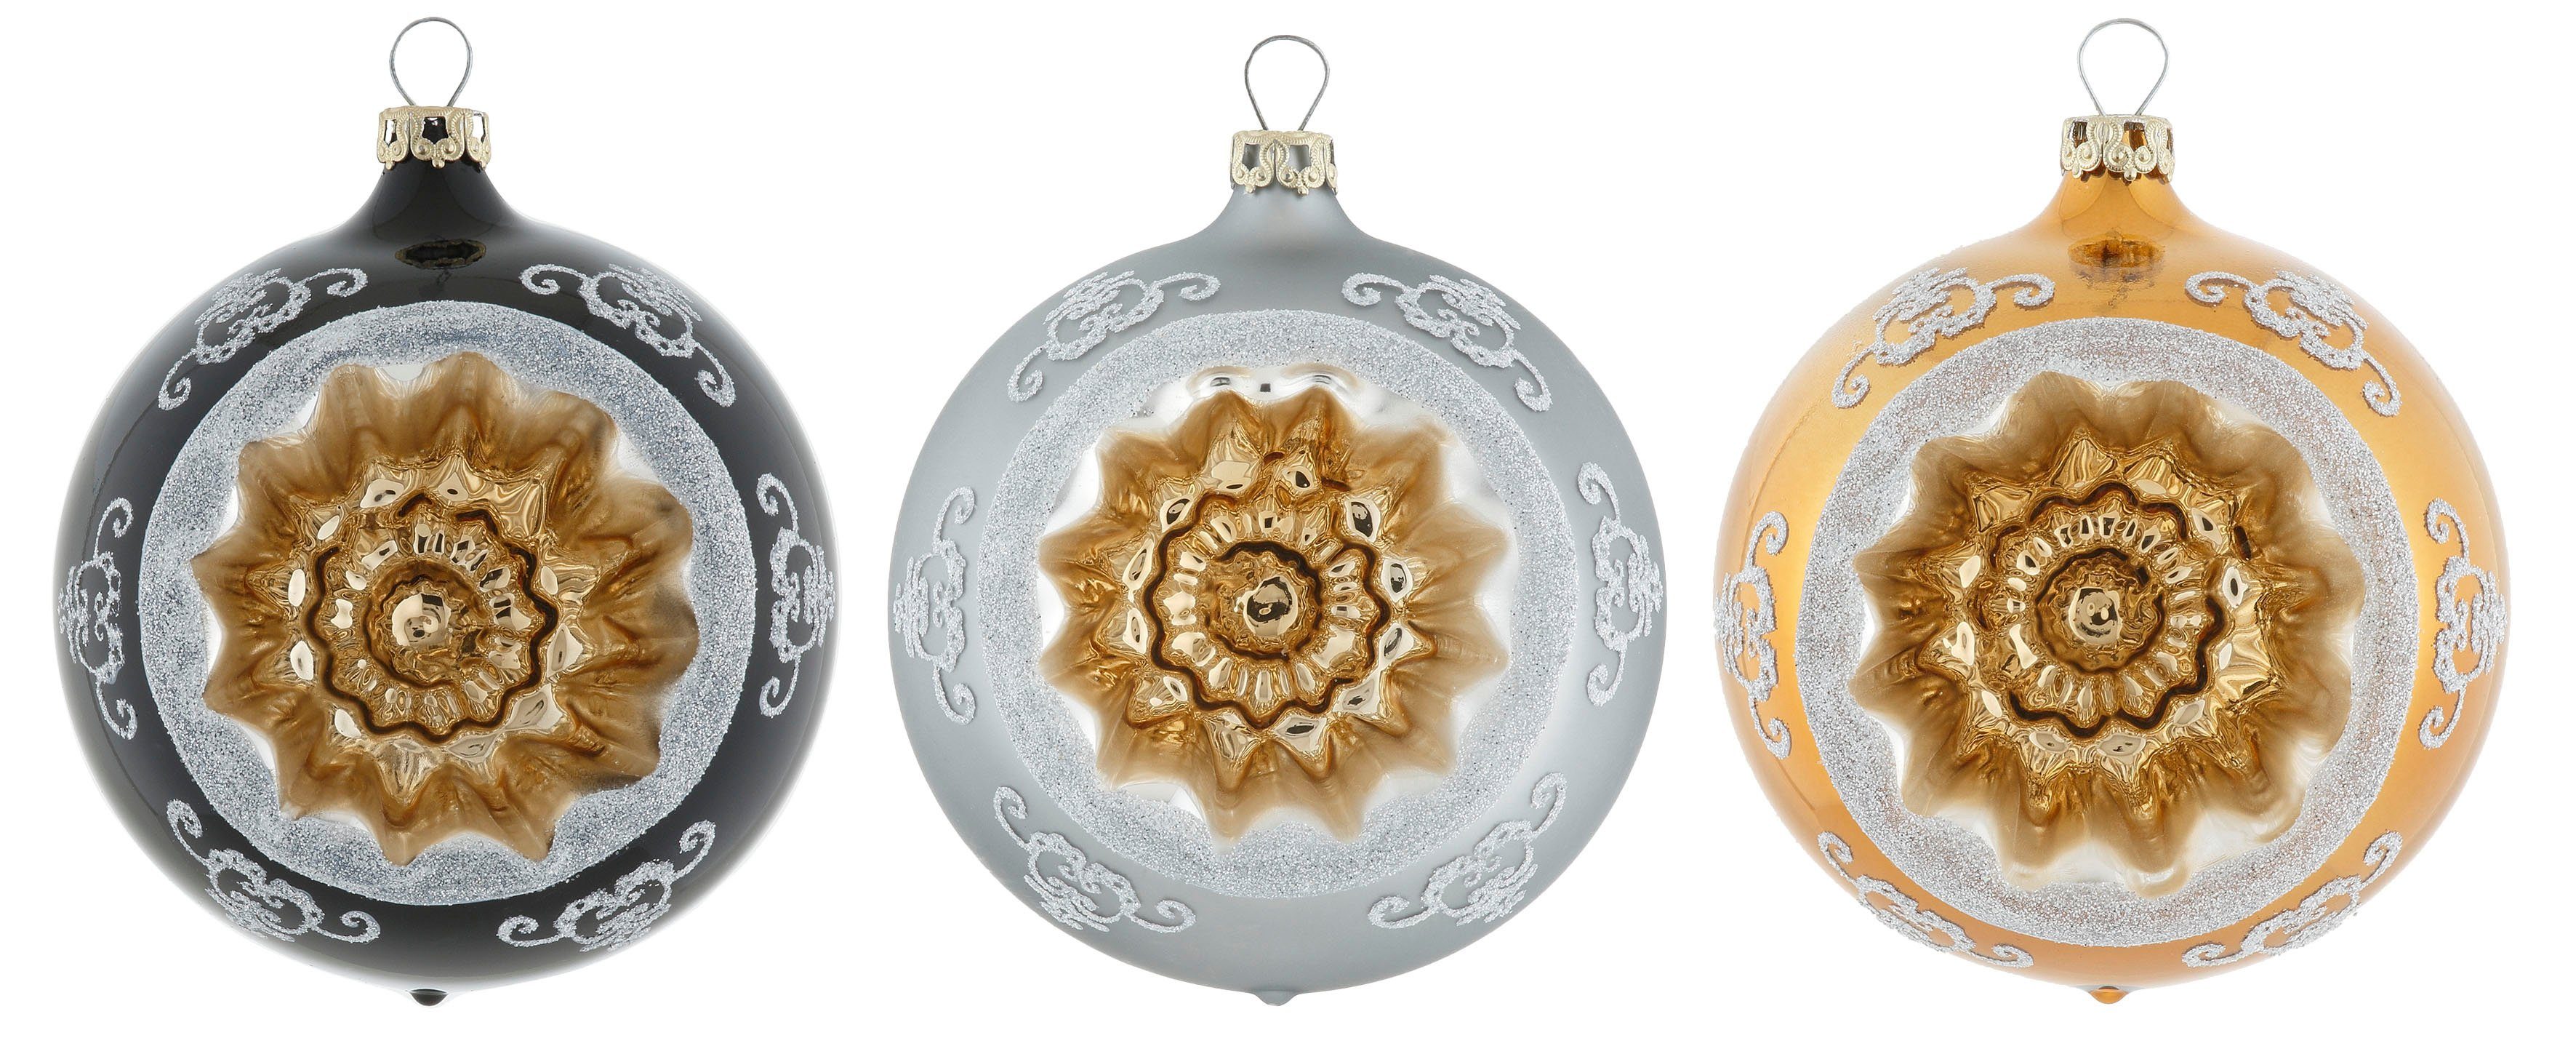 Refelexkugeln (3 Weihnachtsbaumkugel Thüringer St), Glas, Christbaumschmuck Black&White&Gold, Glasdesign aus Christbaumkugeln hochwertige Weihnachtsdeko,